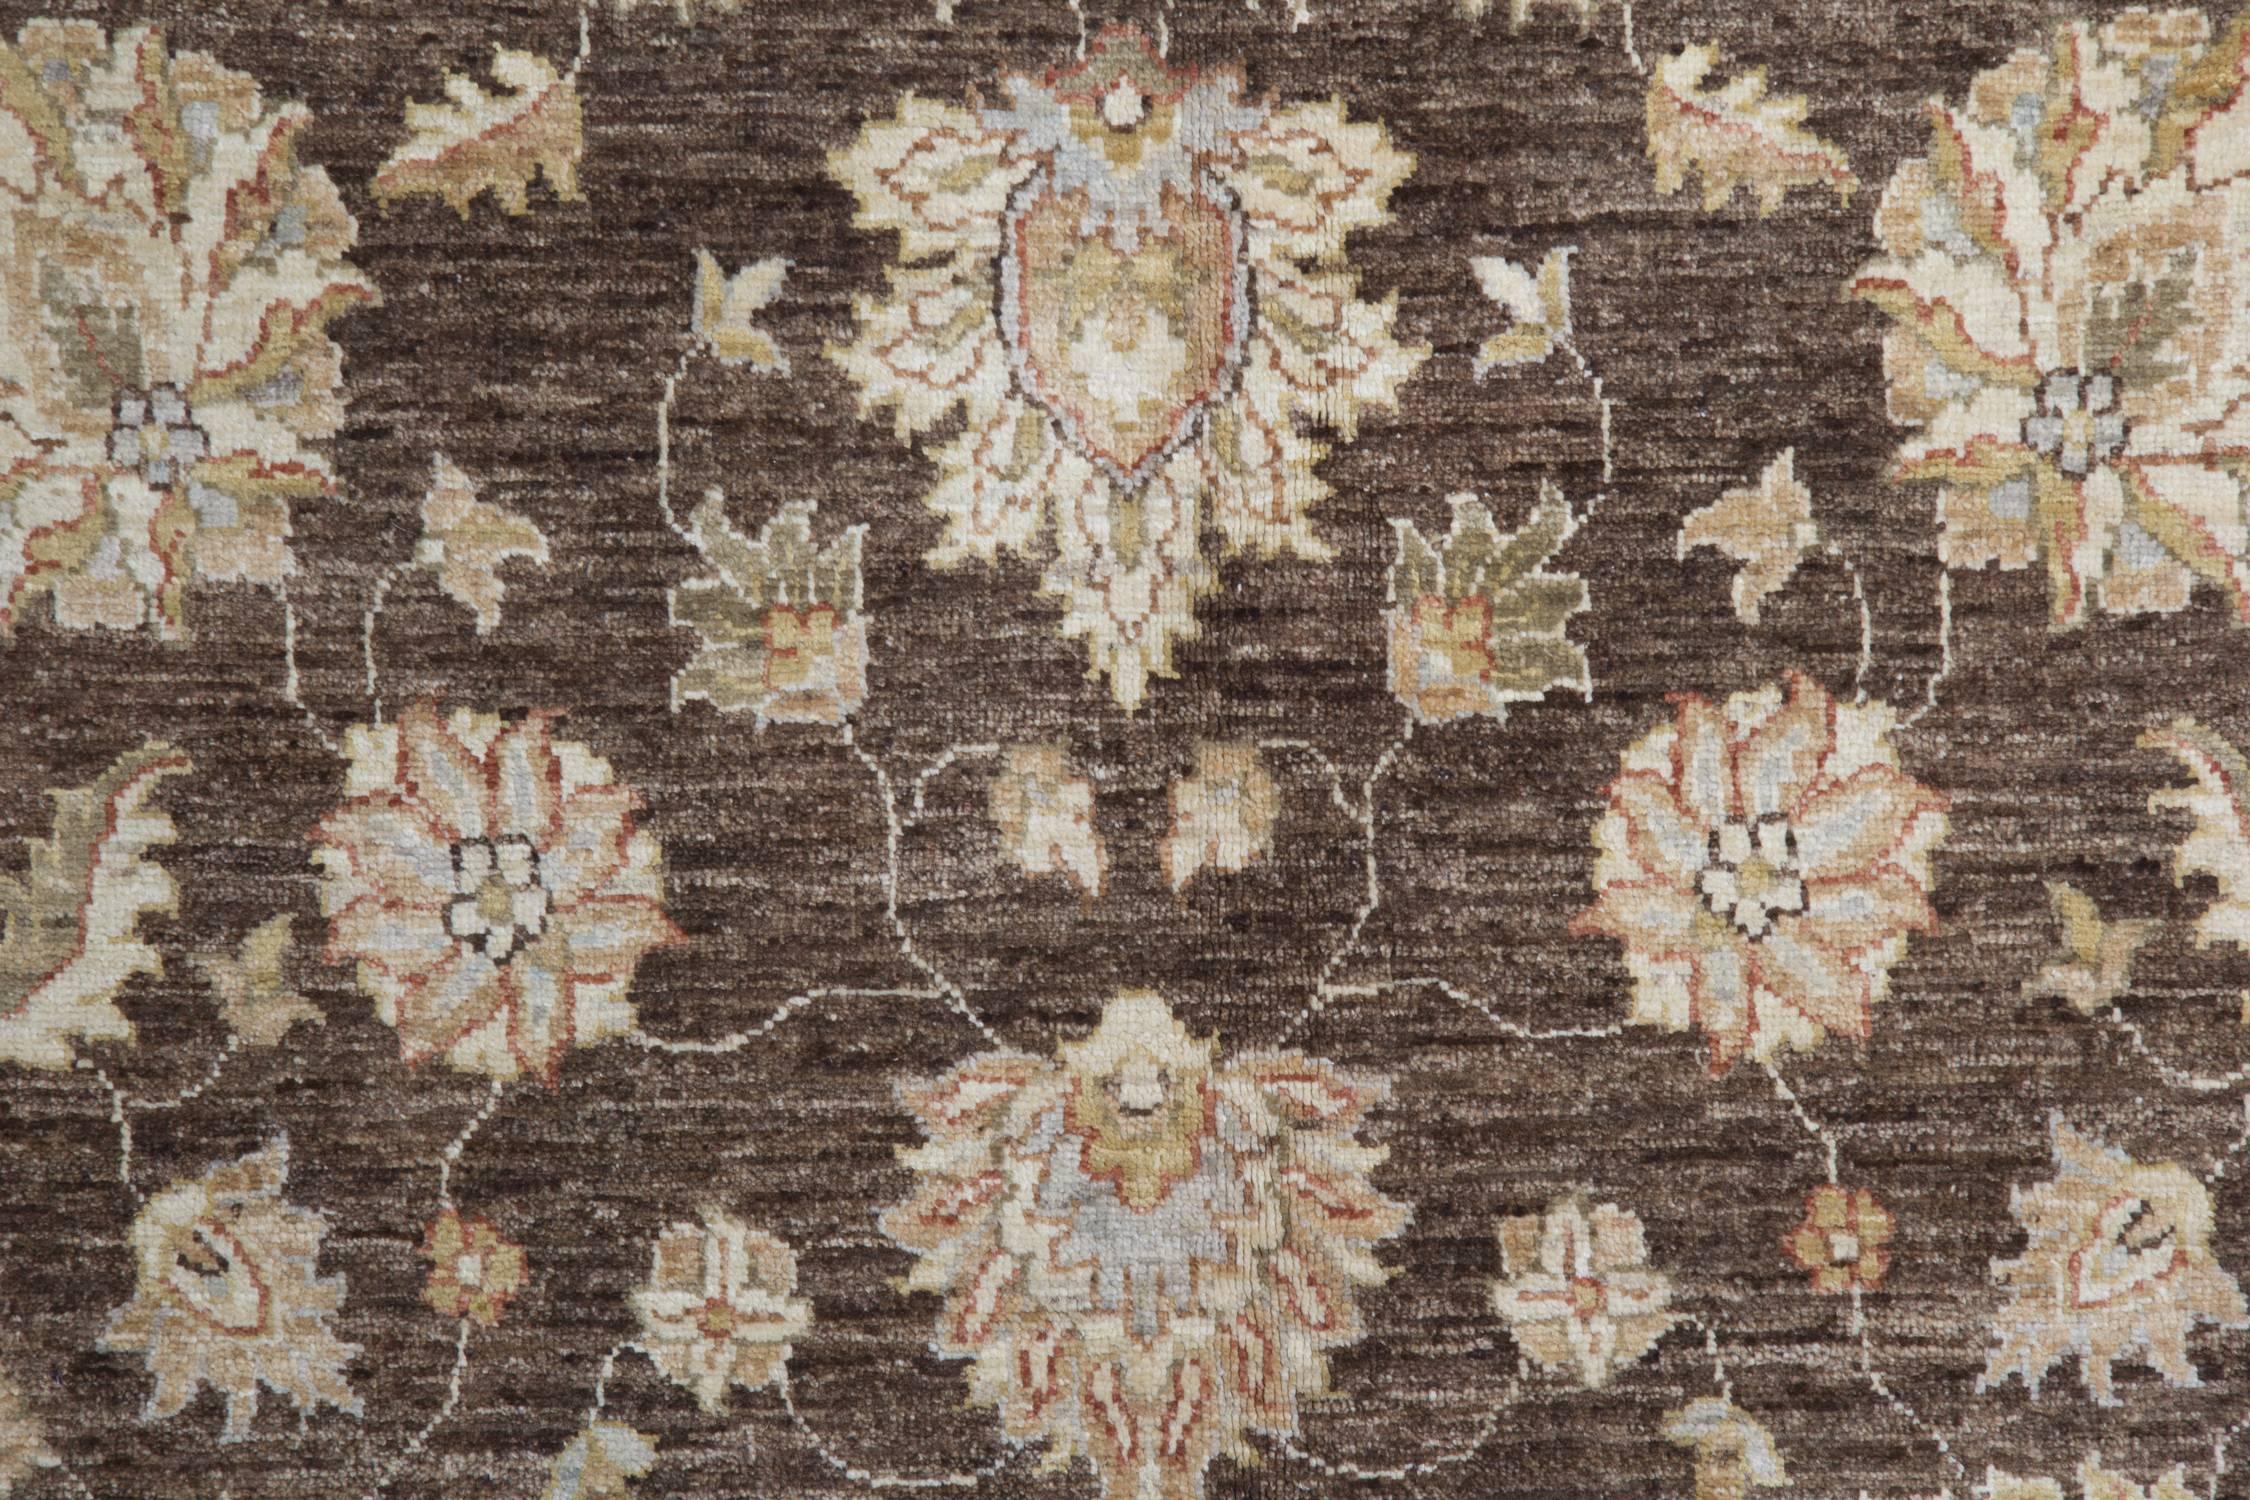 Sultanabad Oriental Rug Hand Made Carpet Floral Design Living Room for Sale For Sale